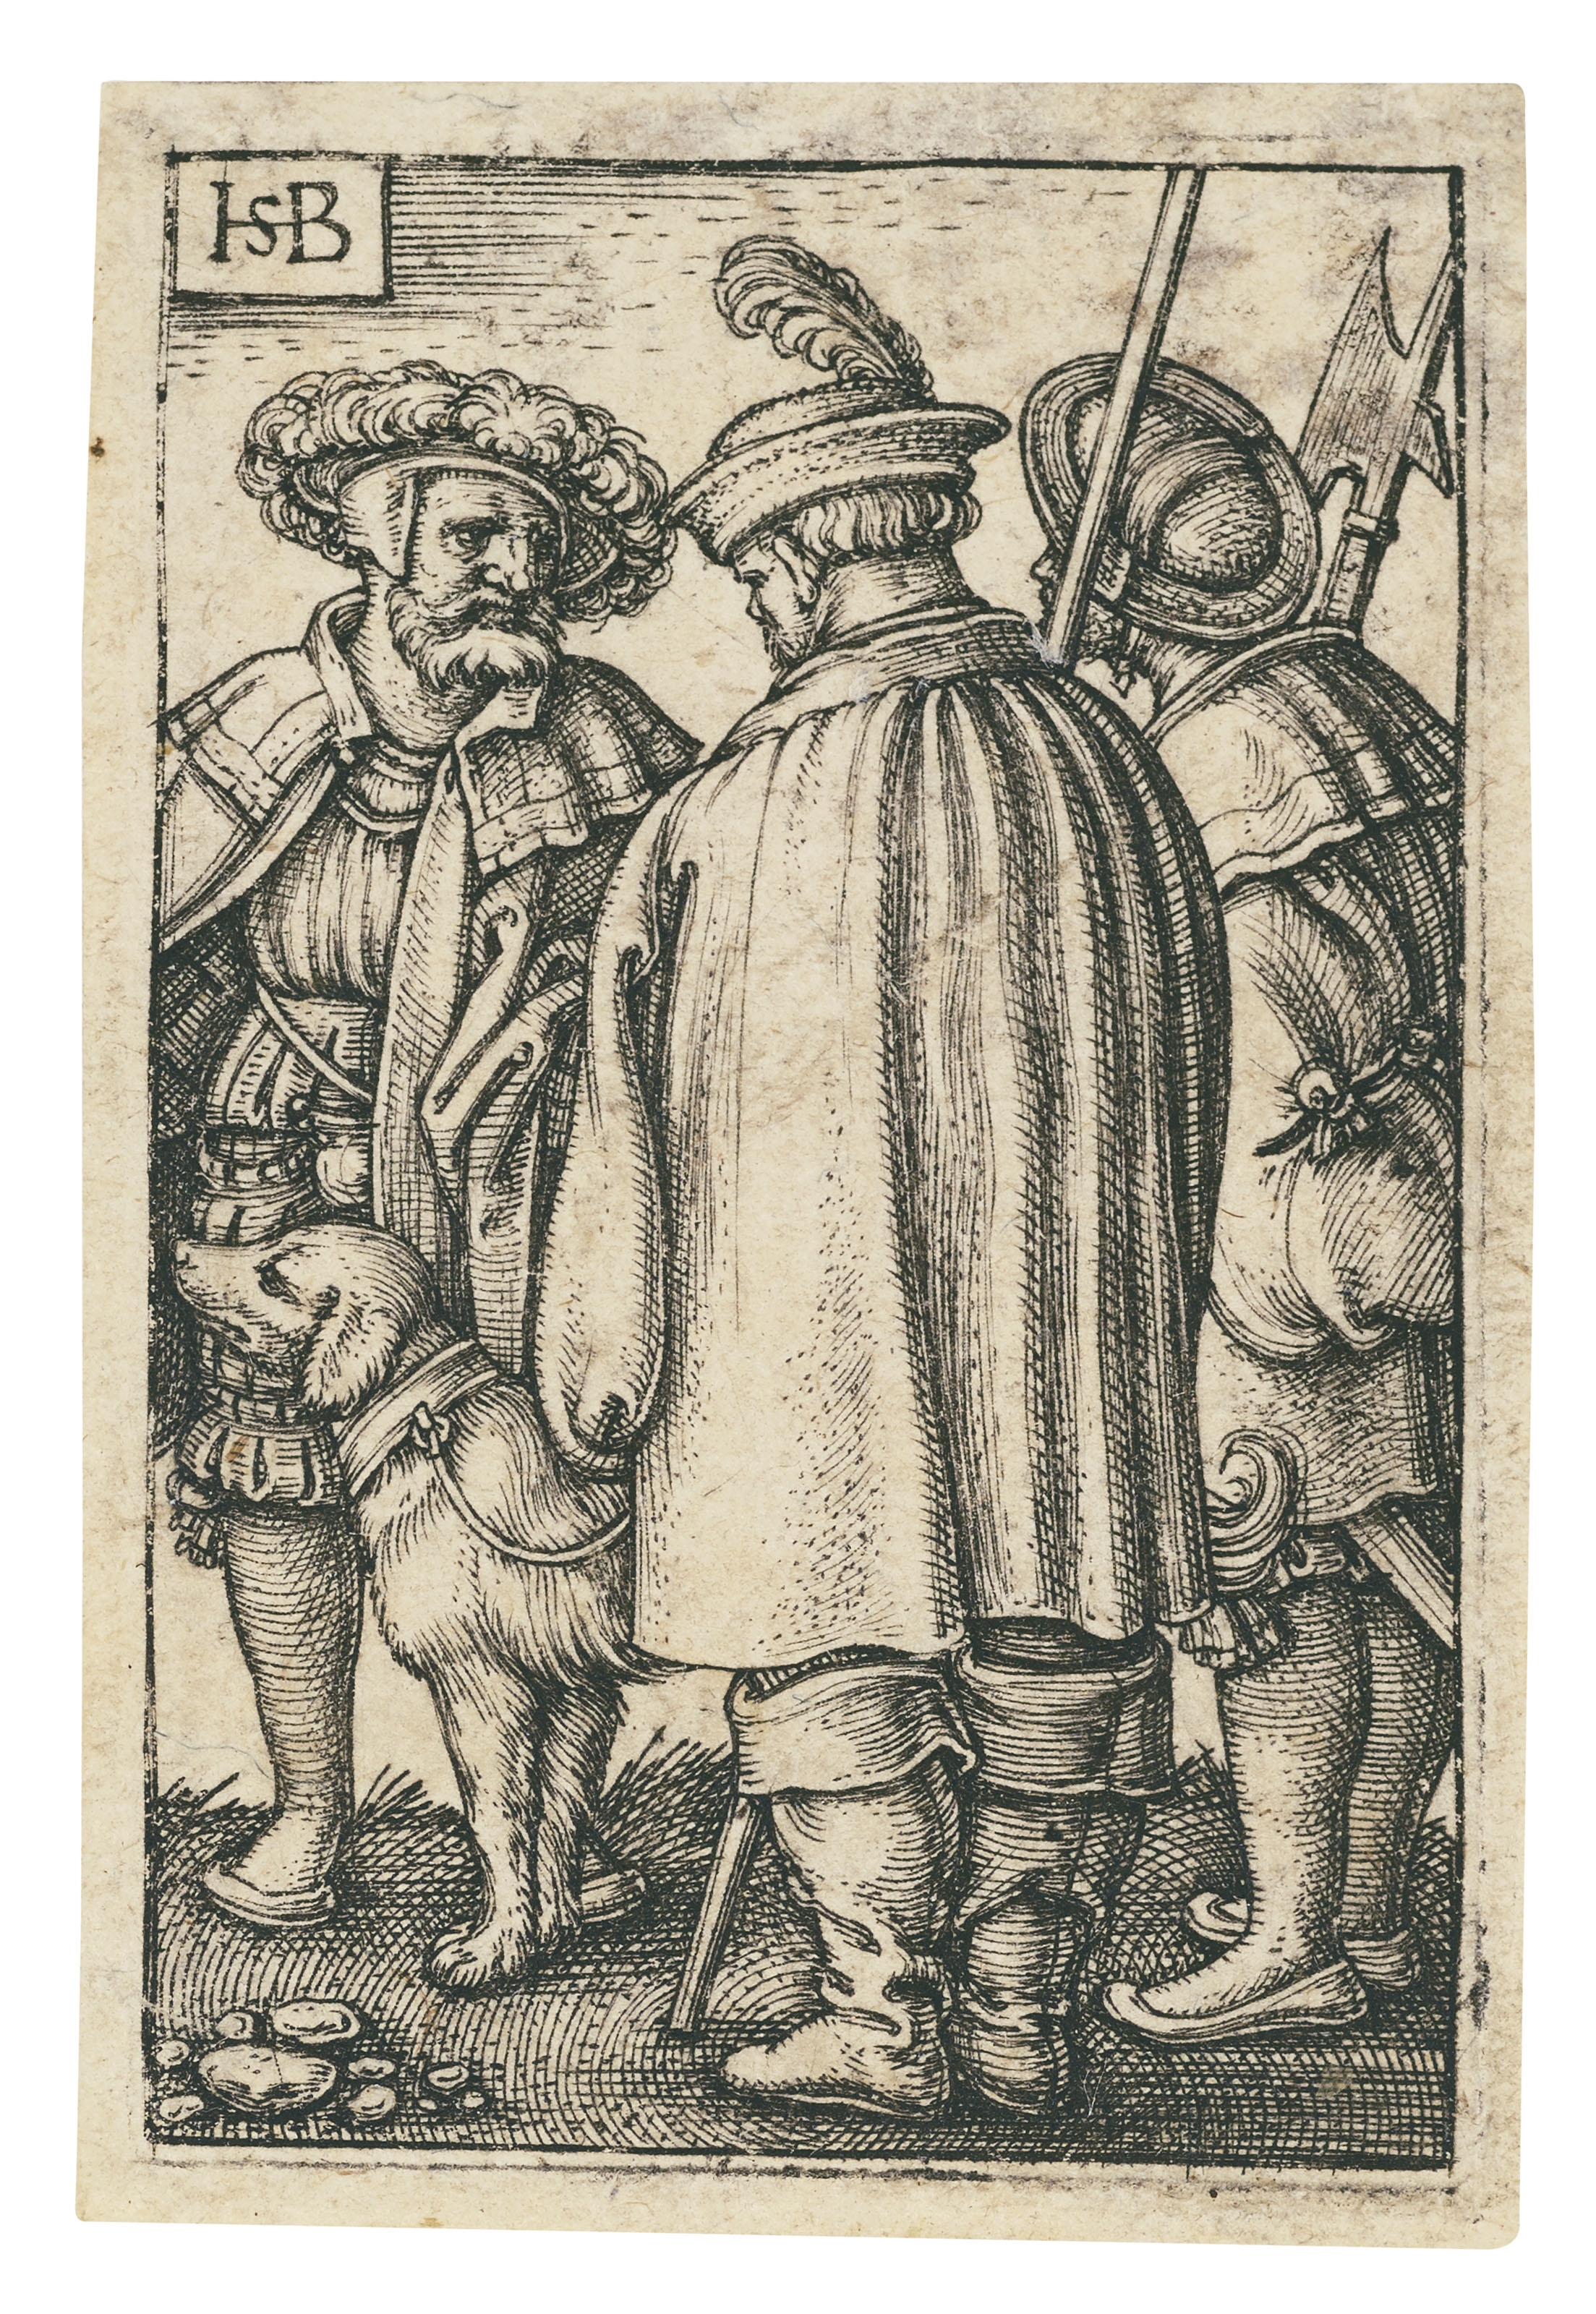 Standard-Bearer by Hans Sebald Beham, 1526-1537